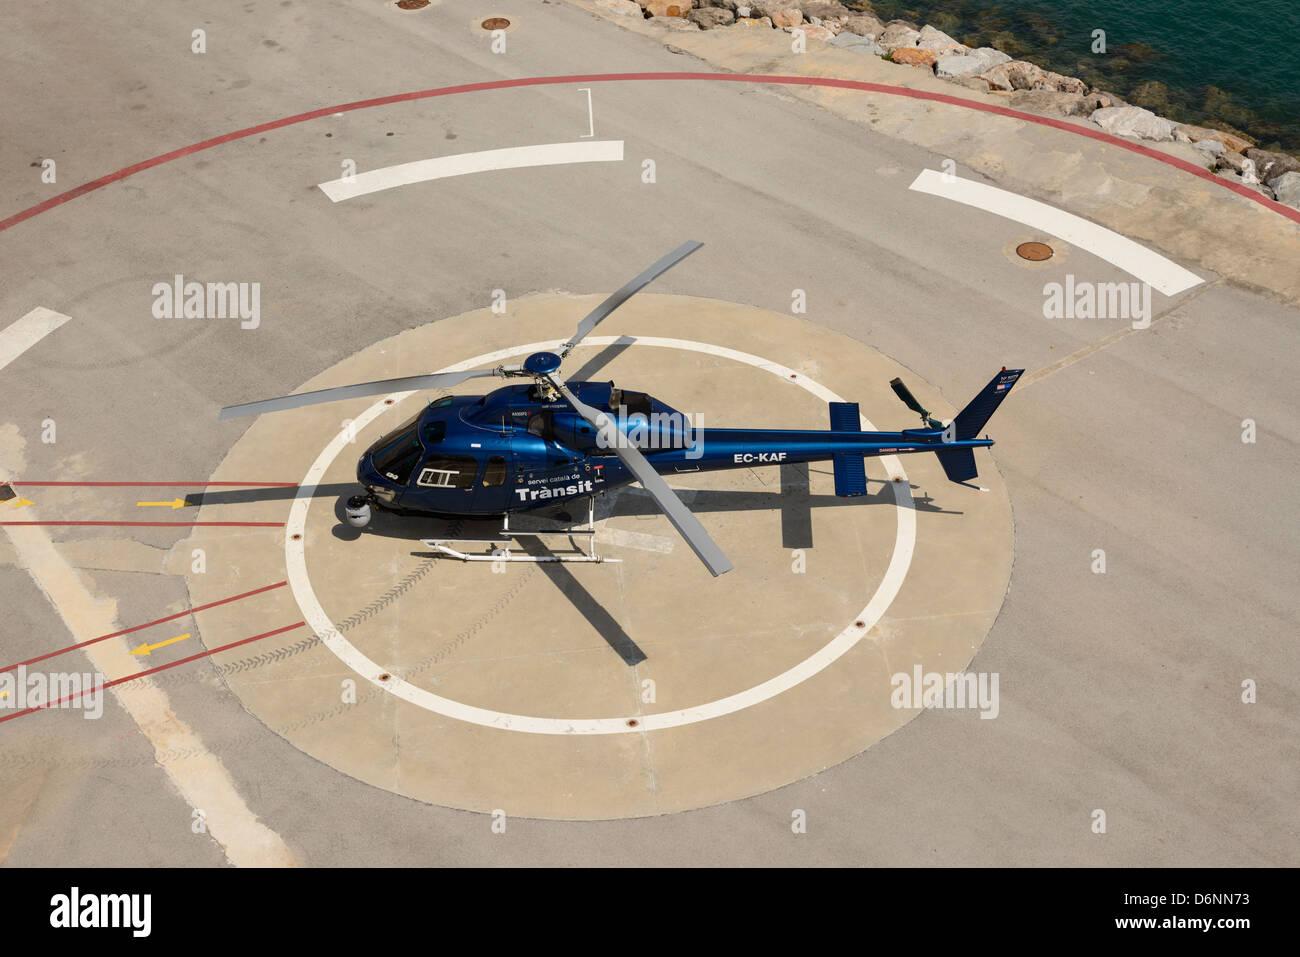 AS355 Ecureuil 2 (Twin Eichhörnchen) Hubschrauber von Aérospatiale, (Eurocopter Group) Servei Català de Trànsit gemacht. CAThelicopters Stockfoto